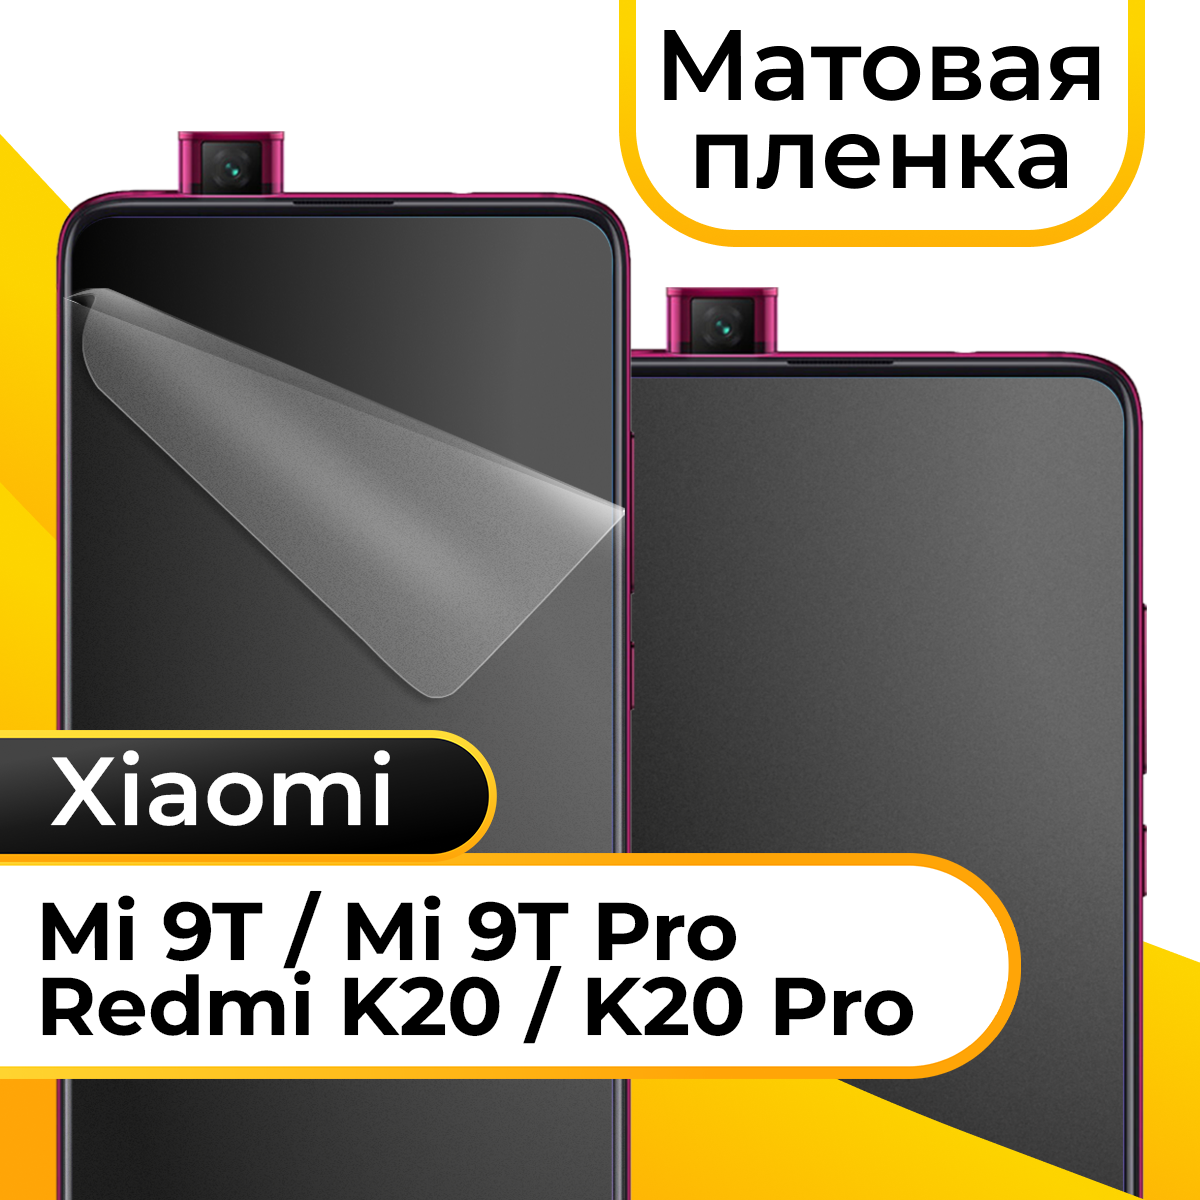 Комплект 2 шт. Матовая пленка для смартфона Xiaomi Mi 9T, Mi 9T Pro, Redmi K20 и K20 Pro / Защитная пленка на смартфон Сяоми Ми 9Т, Ми 9Т Про, Редми К20 и К20 Про